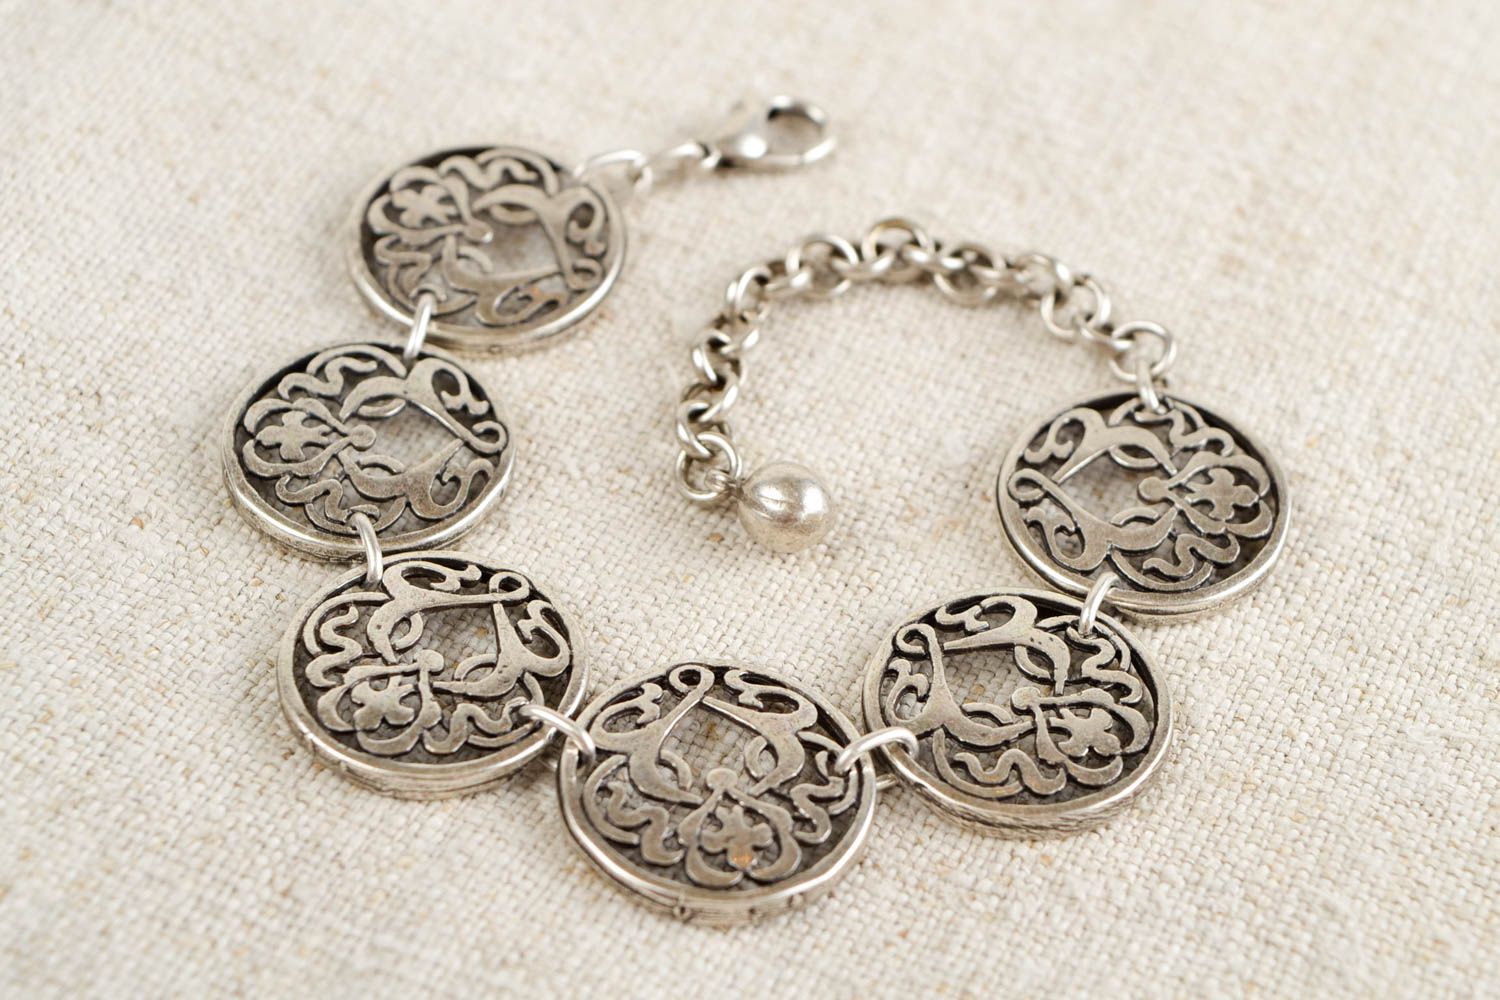 Beautiful handmade metal bracelet designs artisan jewelry fashion trends photo 1